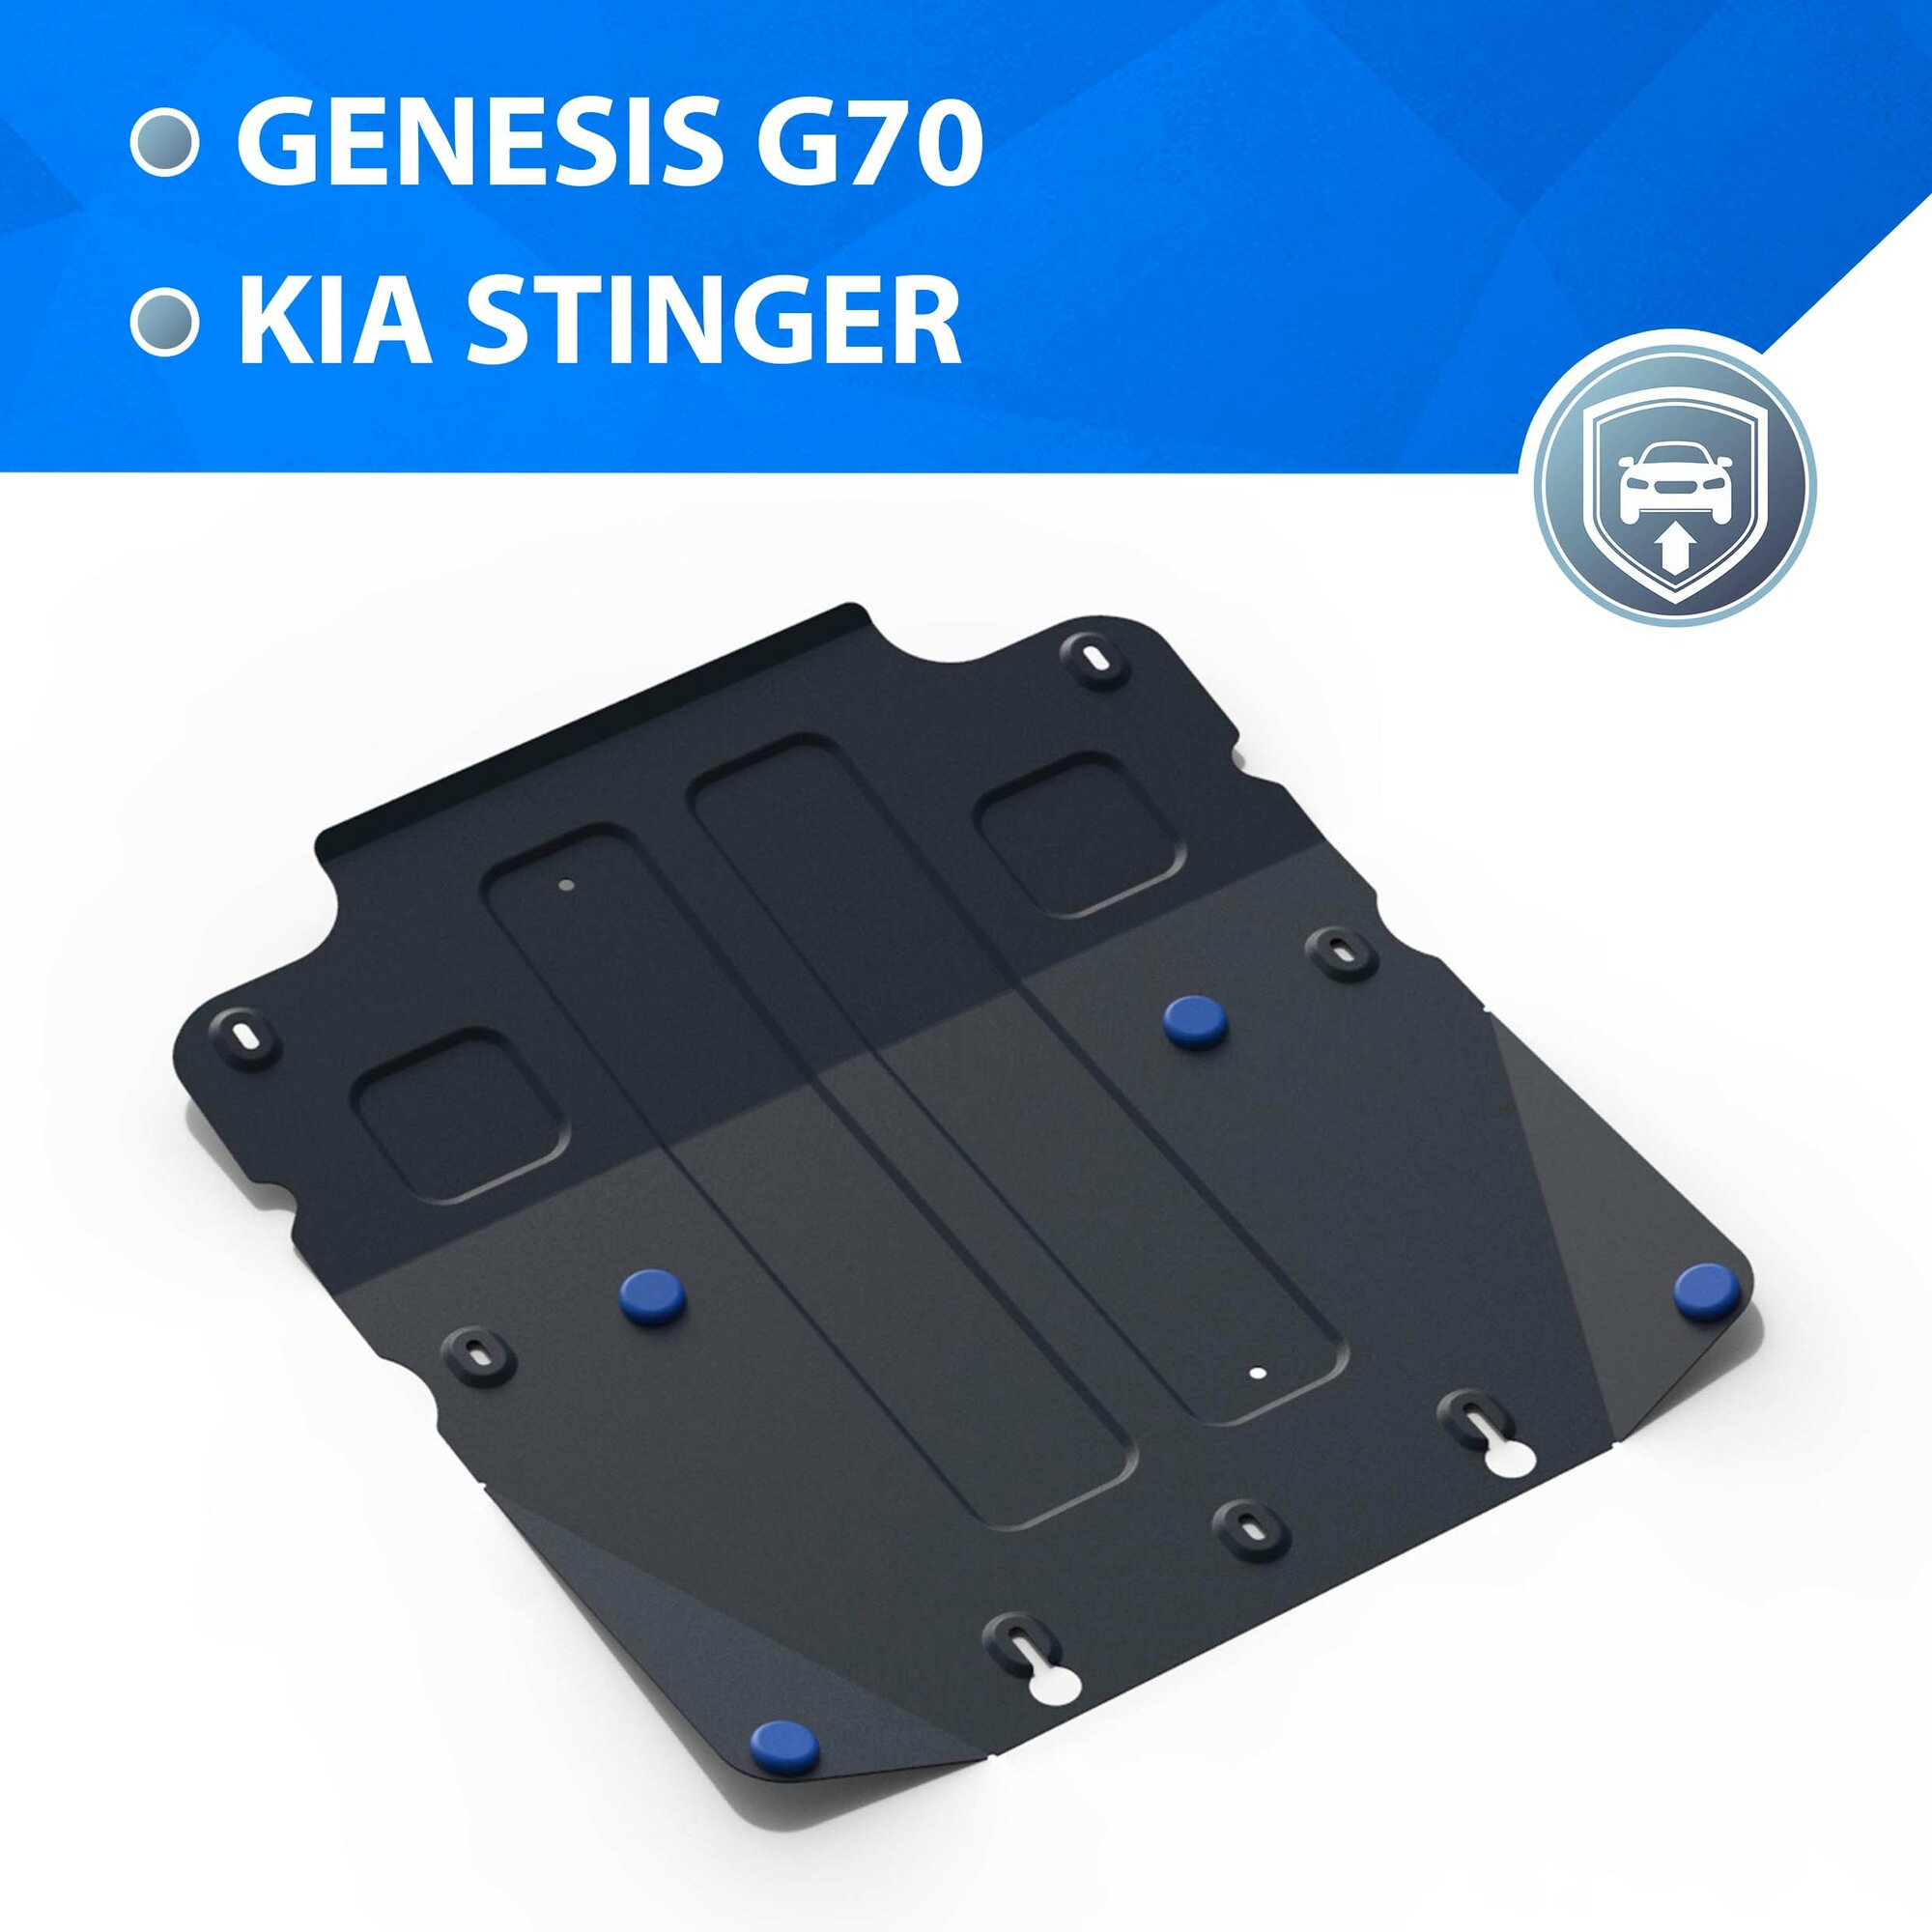 Защита картера Rival для Genesis G70 4WD 2018-2021 2021-н. в./Kia Stinger 4WD 2017-н. в, сталь 1.8 мм, с крепежом, штампованная, 111.2841.1